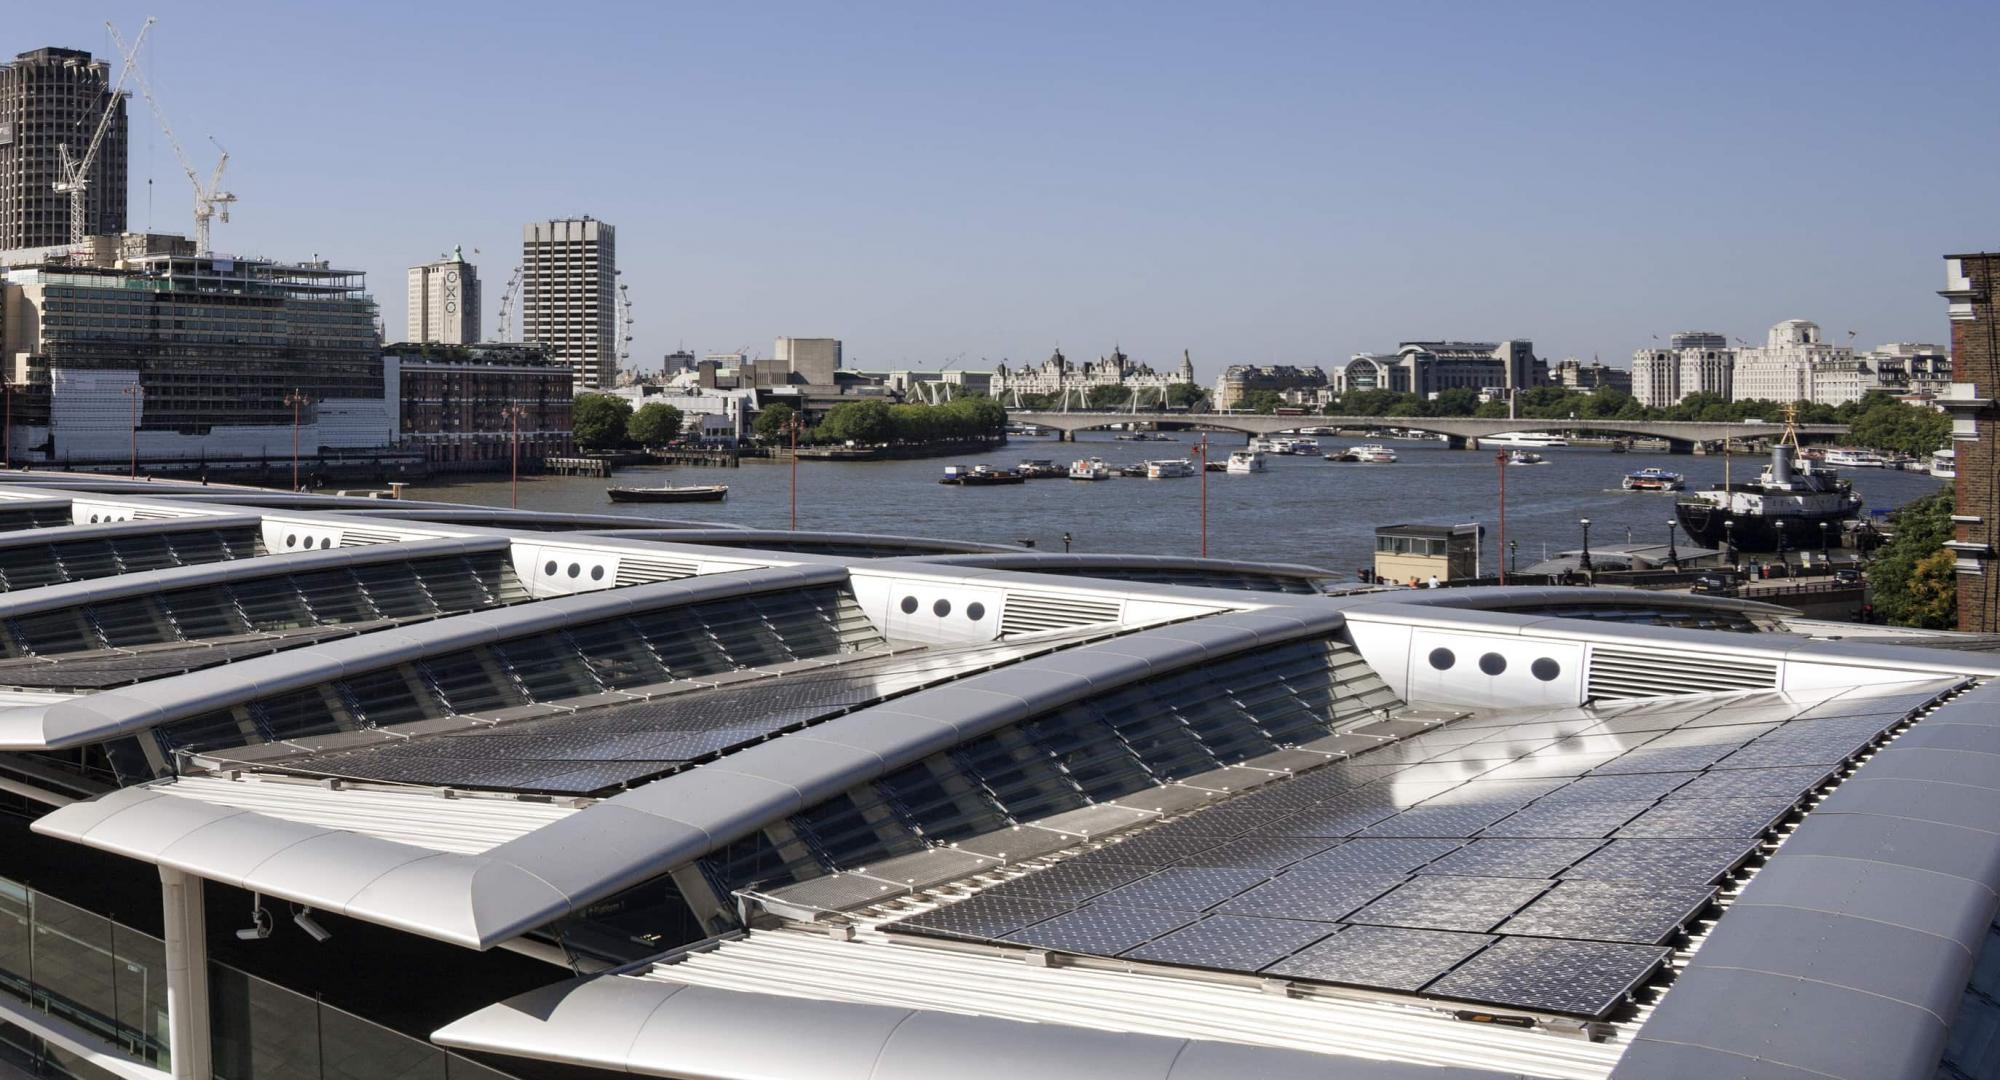 Blackfriars solar roof, via Govia Thameslink Railway 